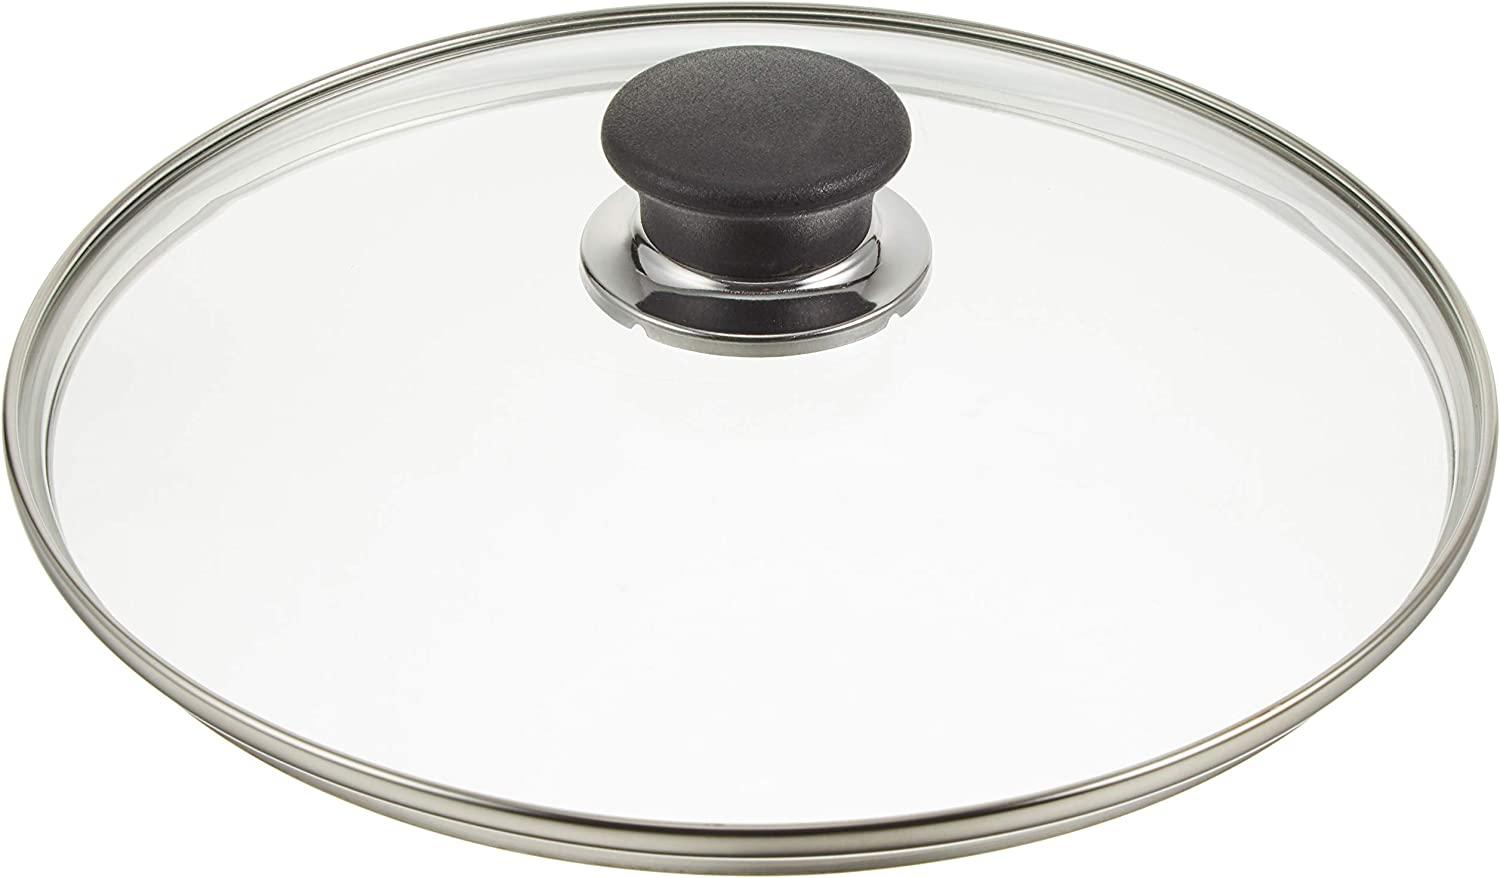 BALLARINI Edelstahlrand & Knauf schwarz 24cm Glasdeckel mit Edelstahlrand, 24 cm, Glas, grau Bild 1